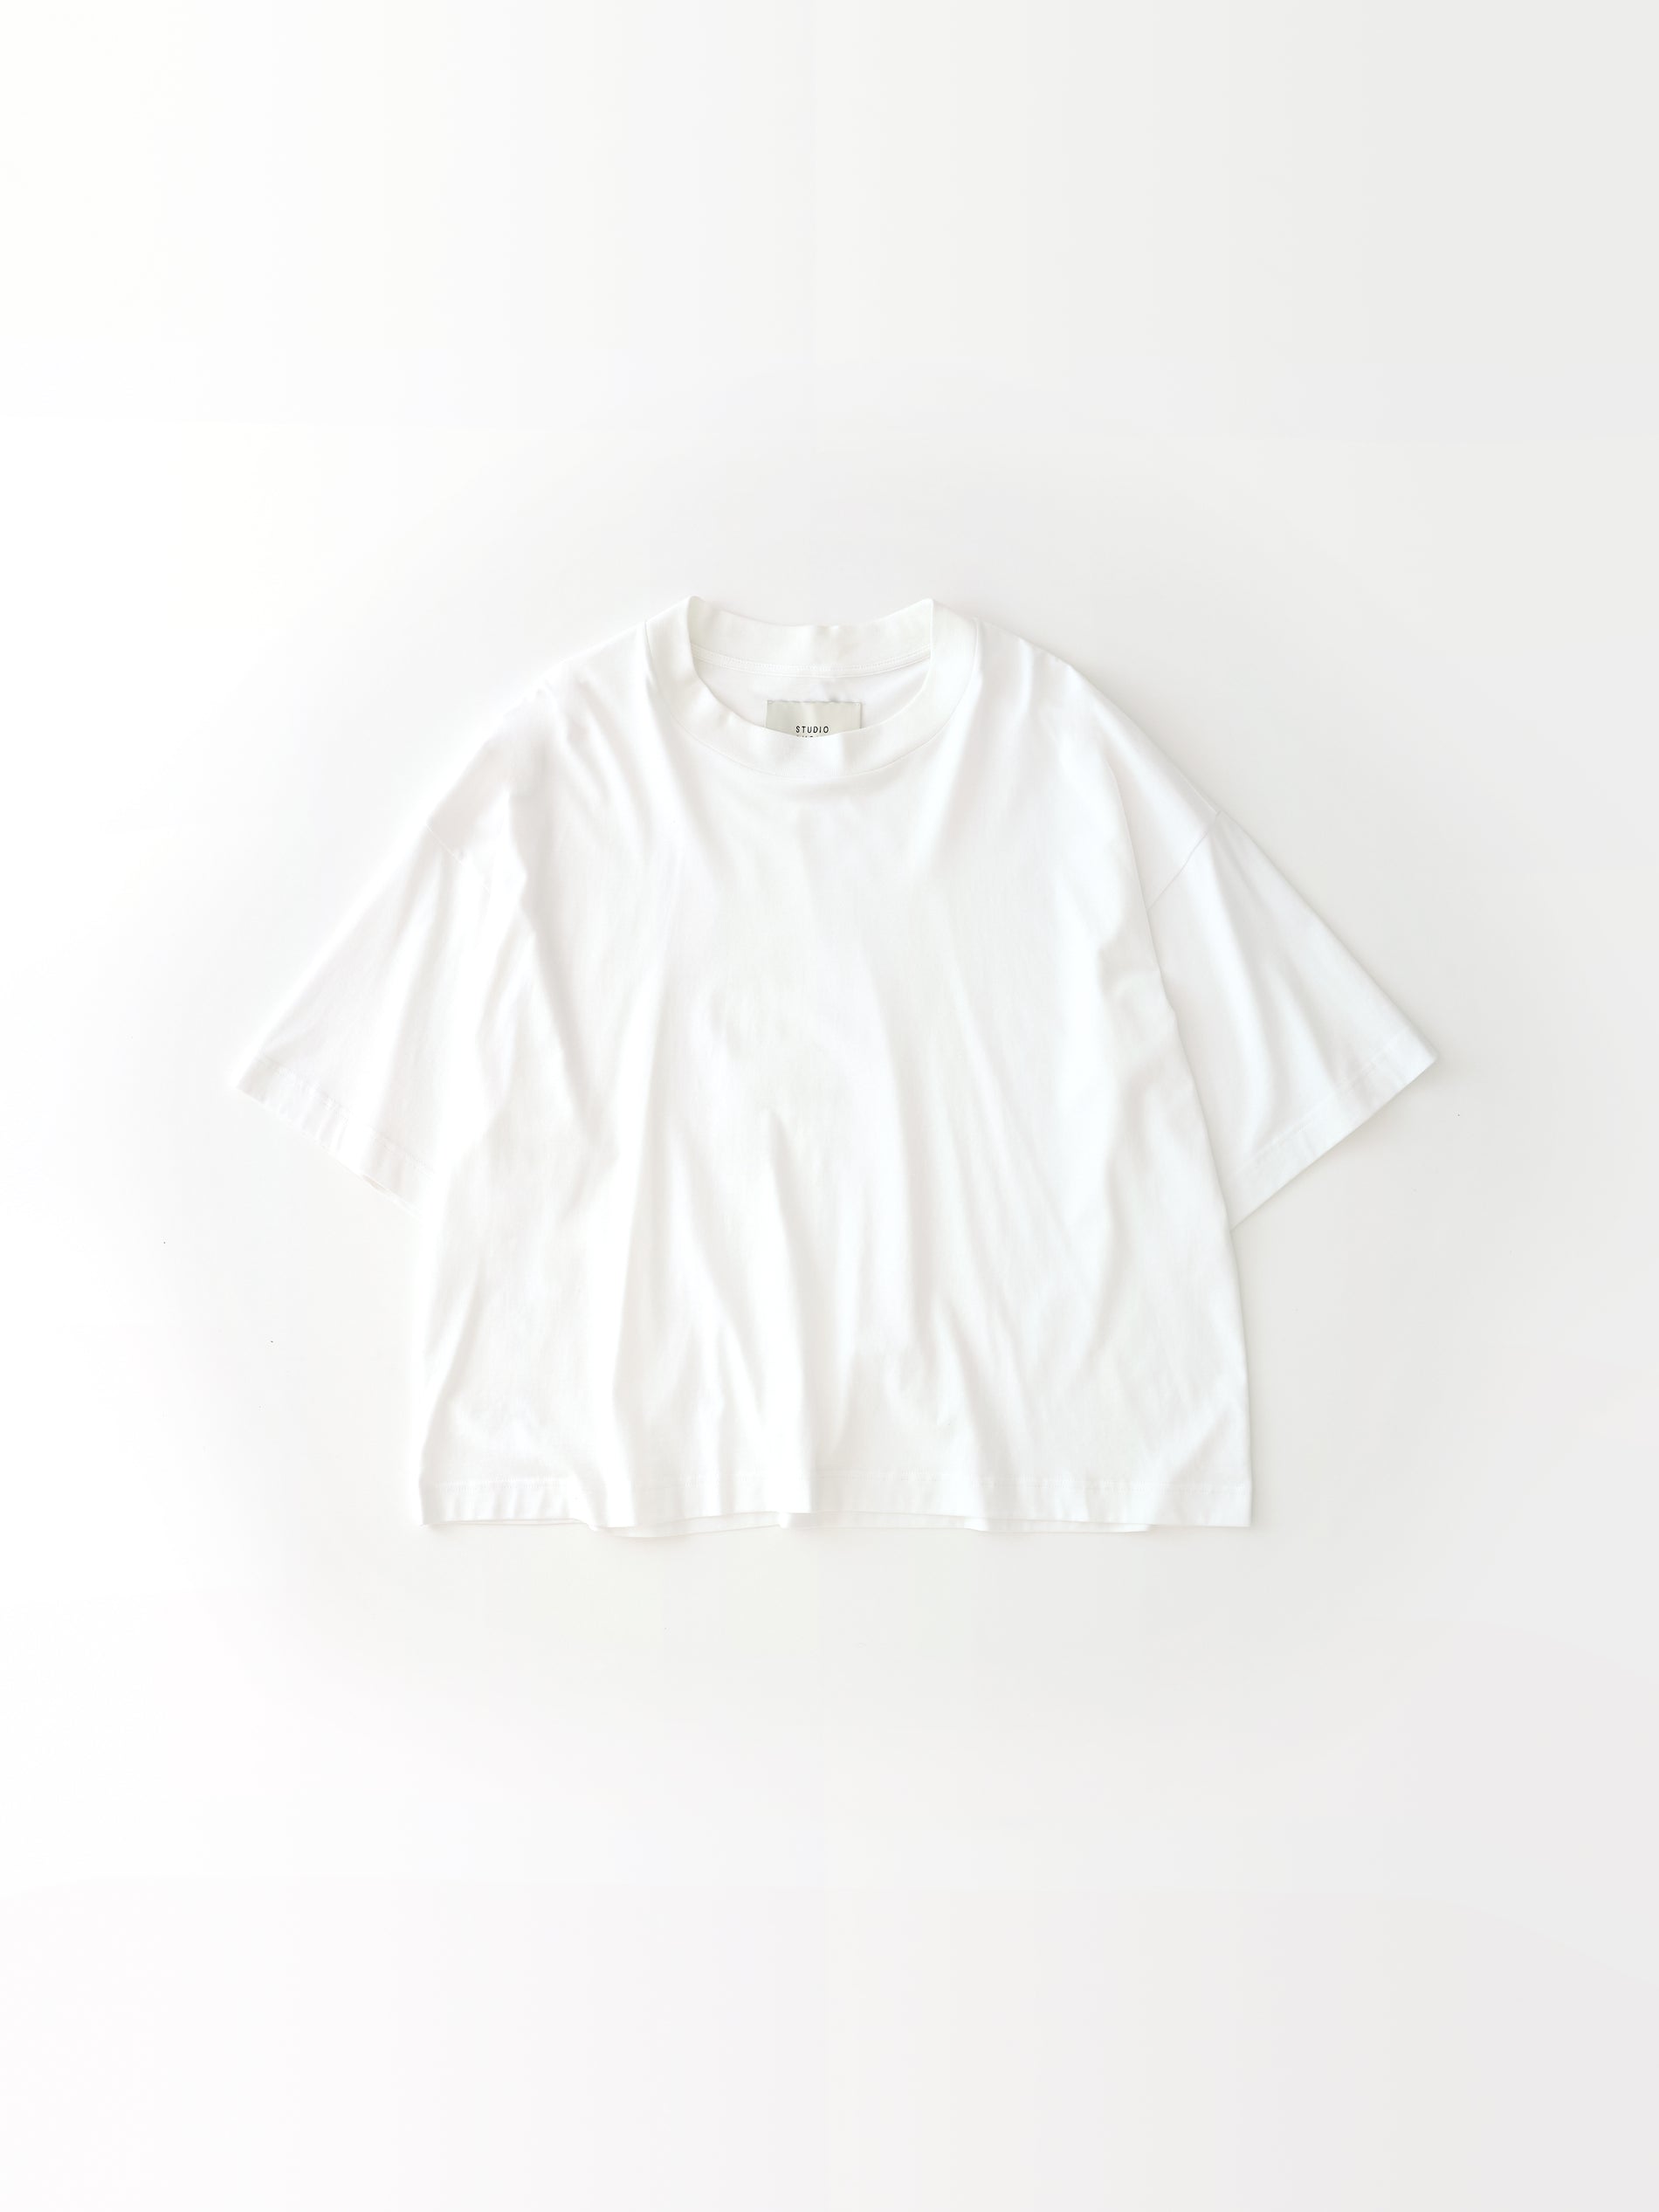 Piu T-Shirt in Optic White